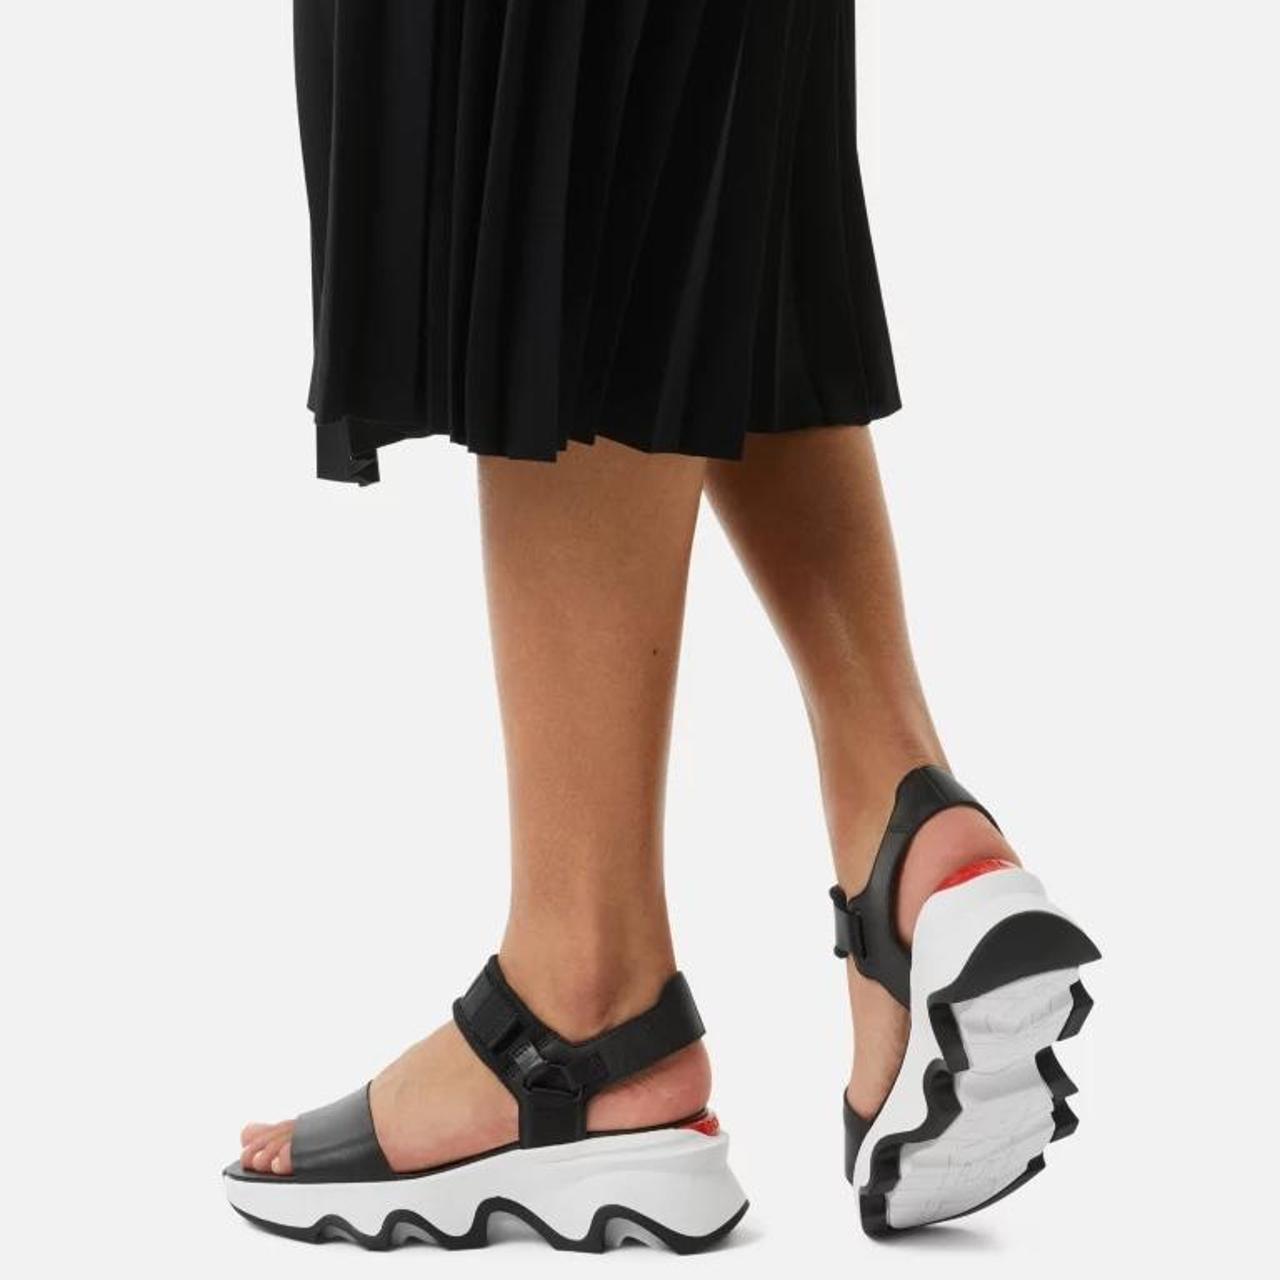 Sorel Women's Black Sandals